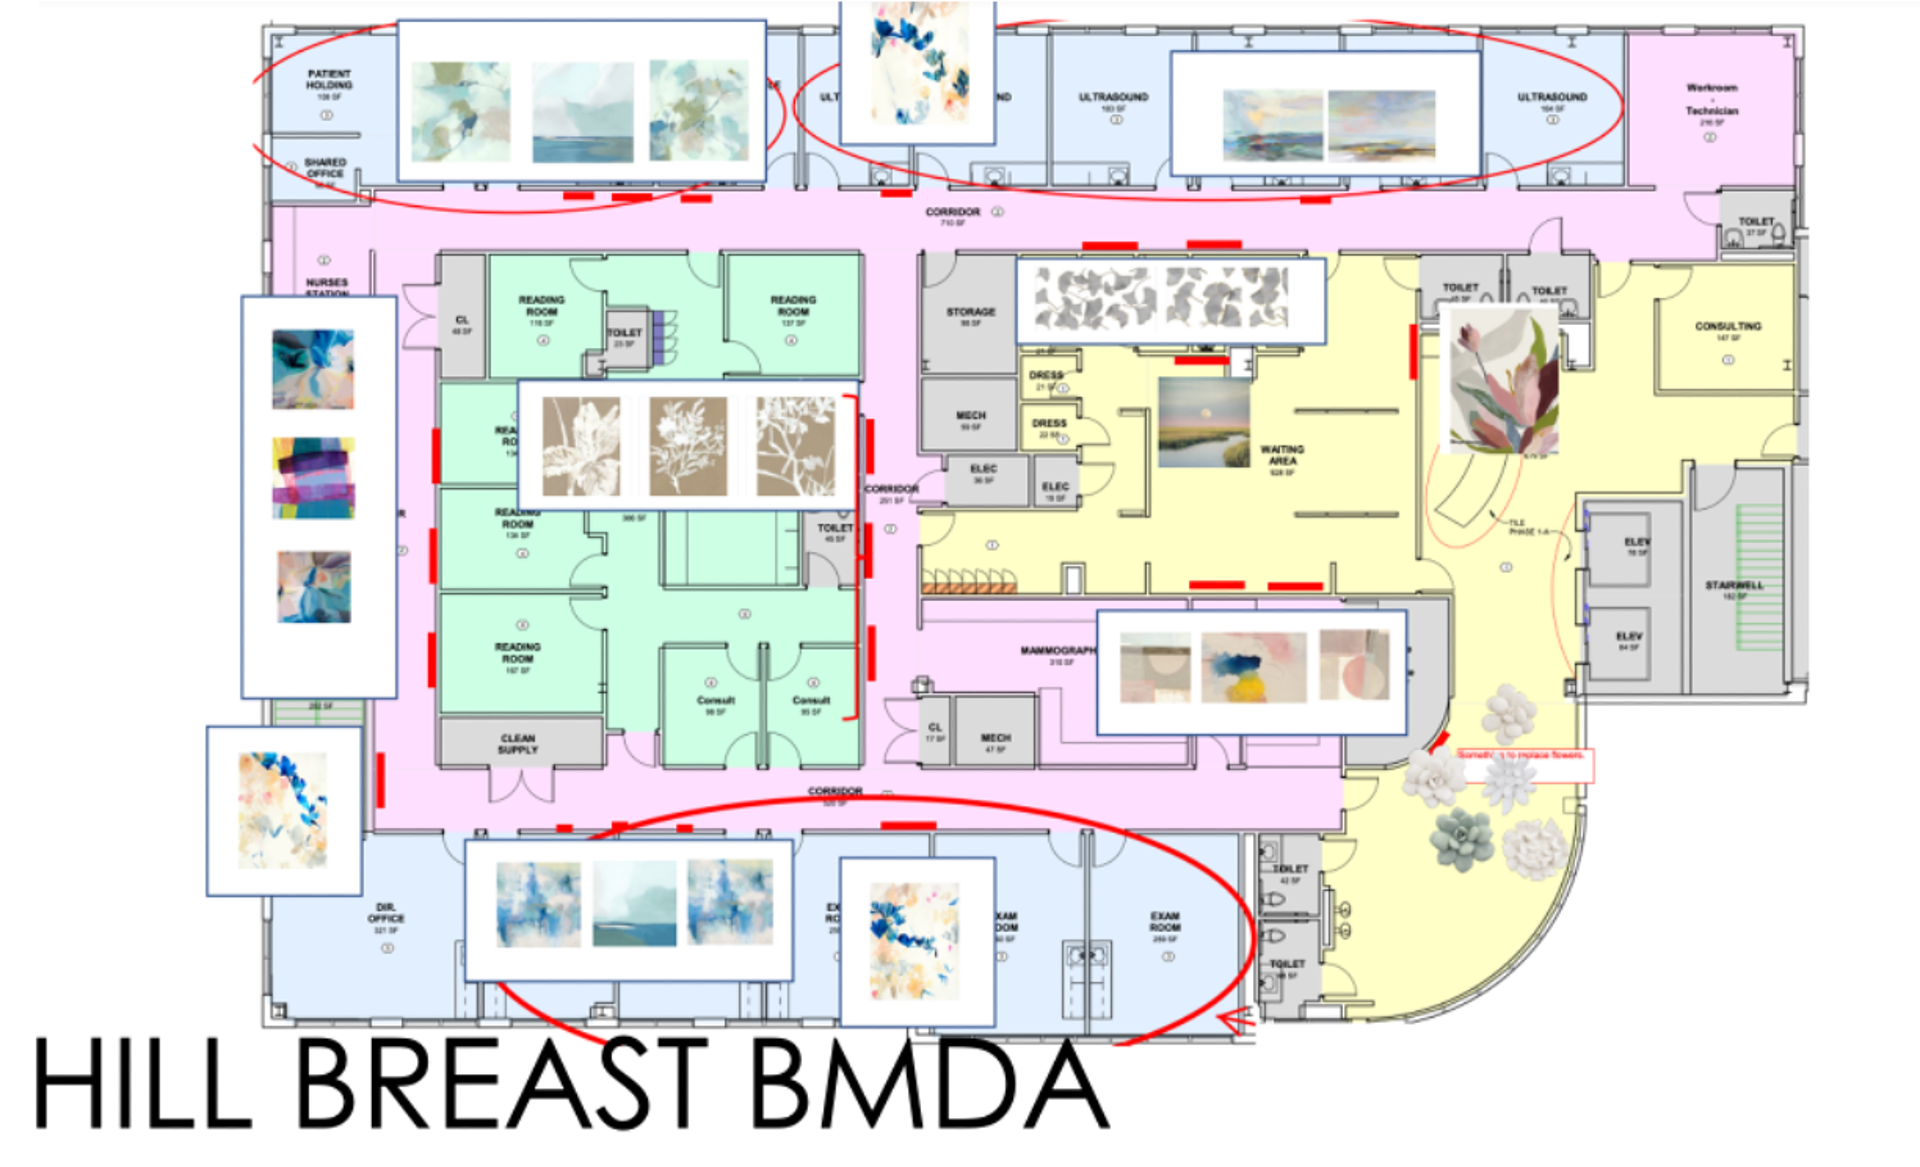 BMDA-Hill Breast- FL 2,3 unframed canvas art, 15 ex rooms, sculptural pieces by Printwork